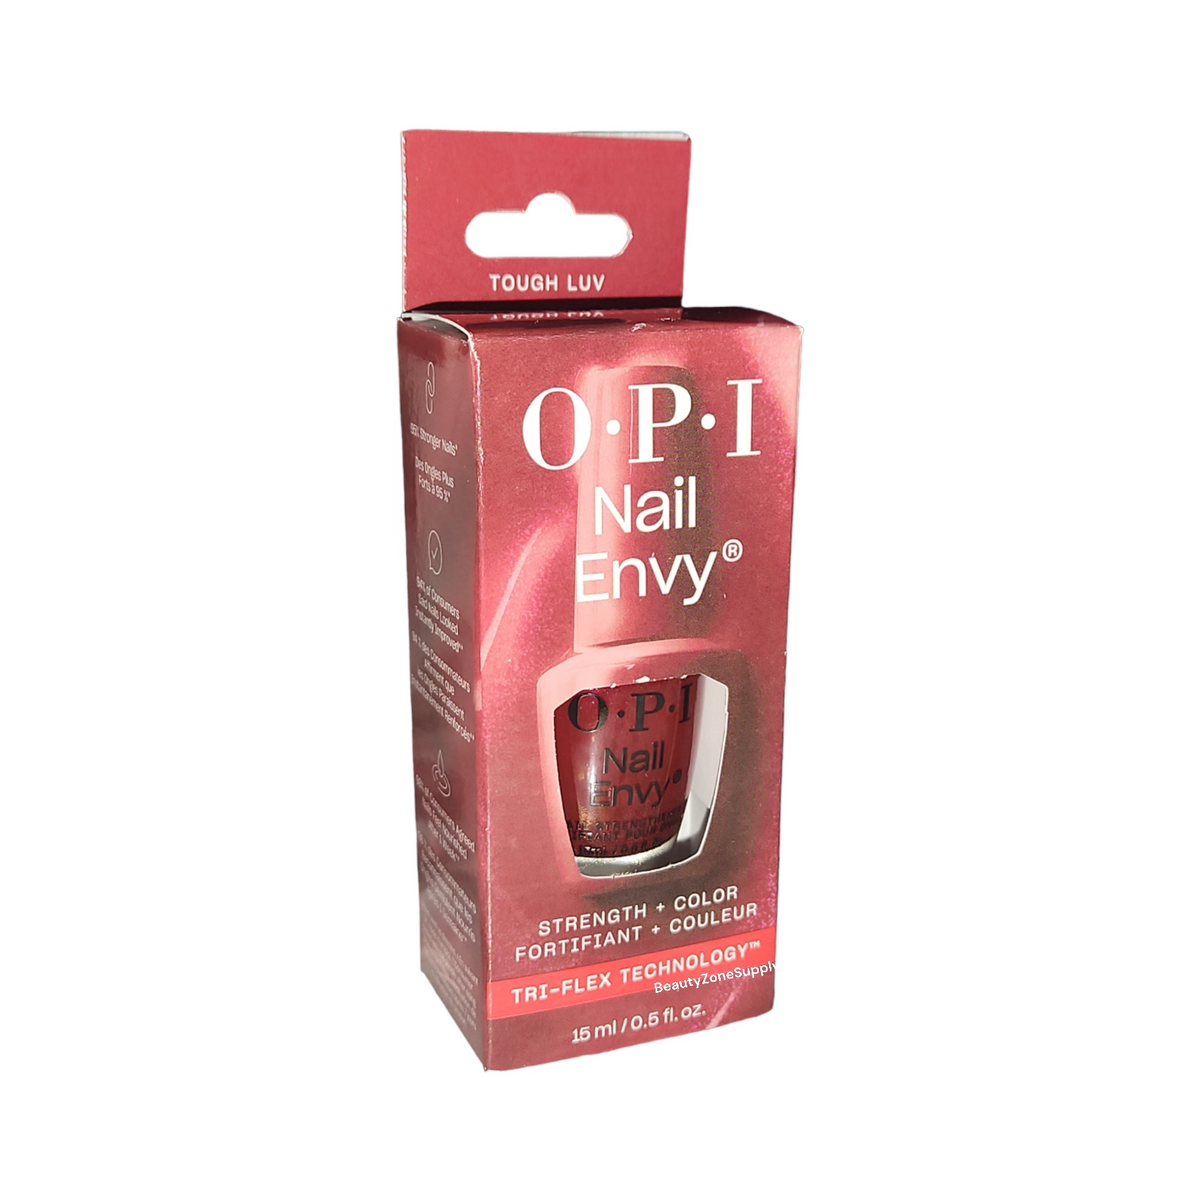 OPI RapiDry Spray, 3.7 fl oz – Universal Companies